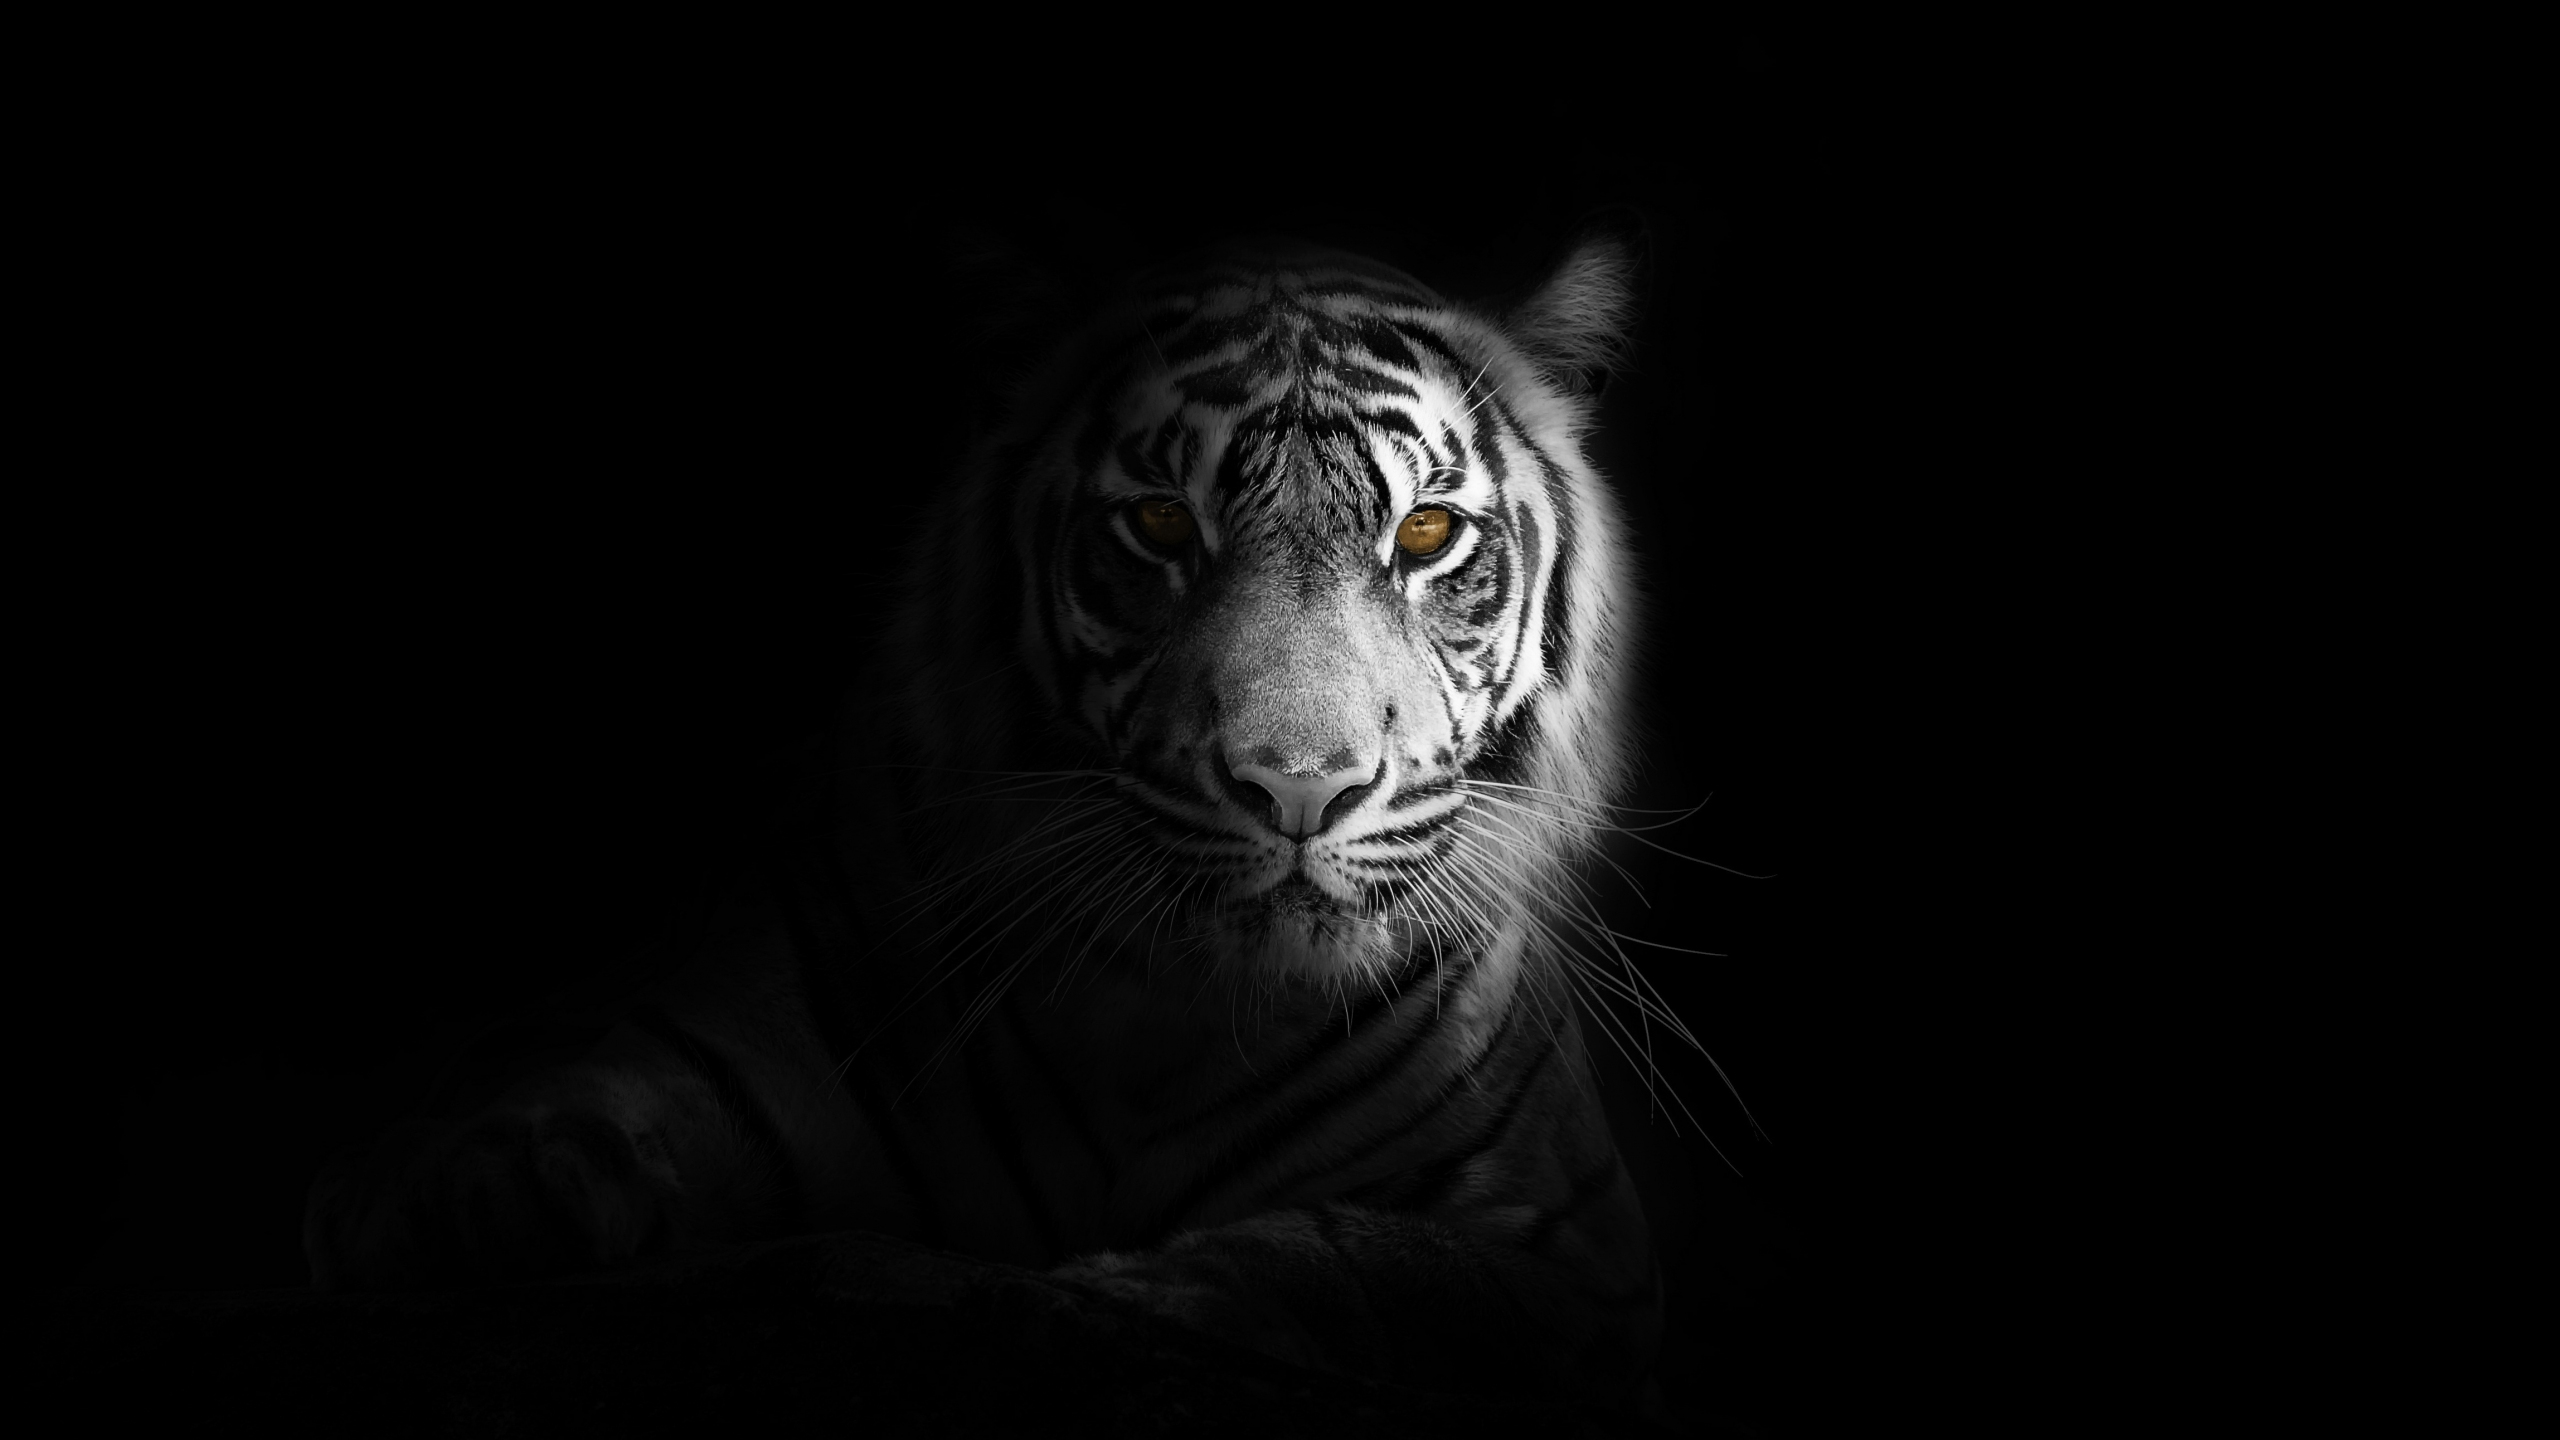 Download wallpaper 2560x1440 portrait, minimal, white tiger, dark, dual  wide 16:9 2560x1440 hd background, 20868